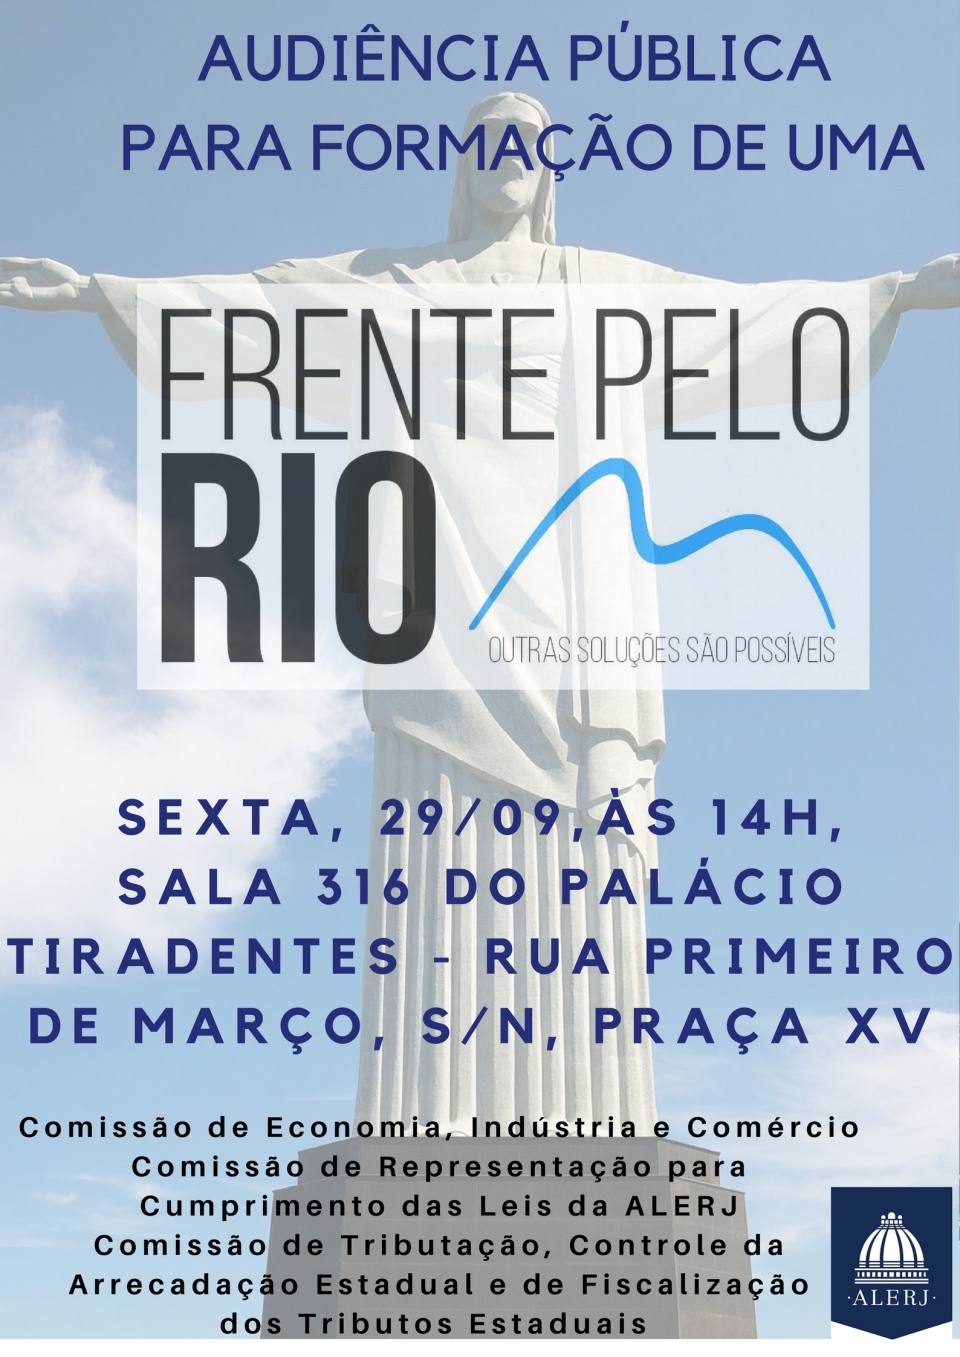 Convite_Audiencia Publica_Frente Pelo Rio_29_09_2017_final